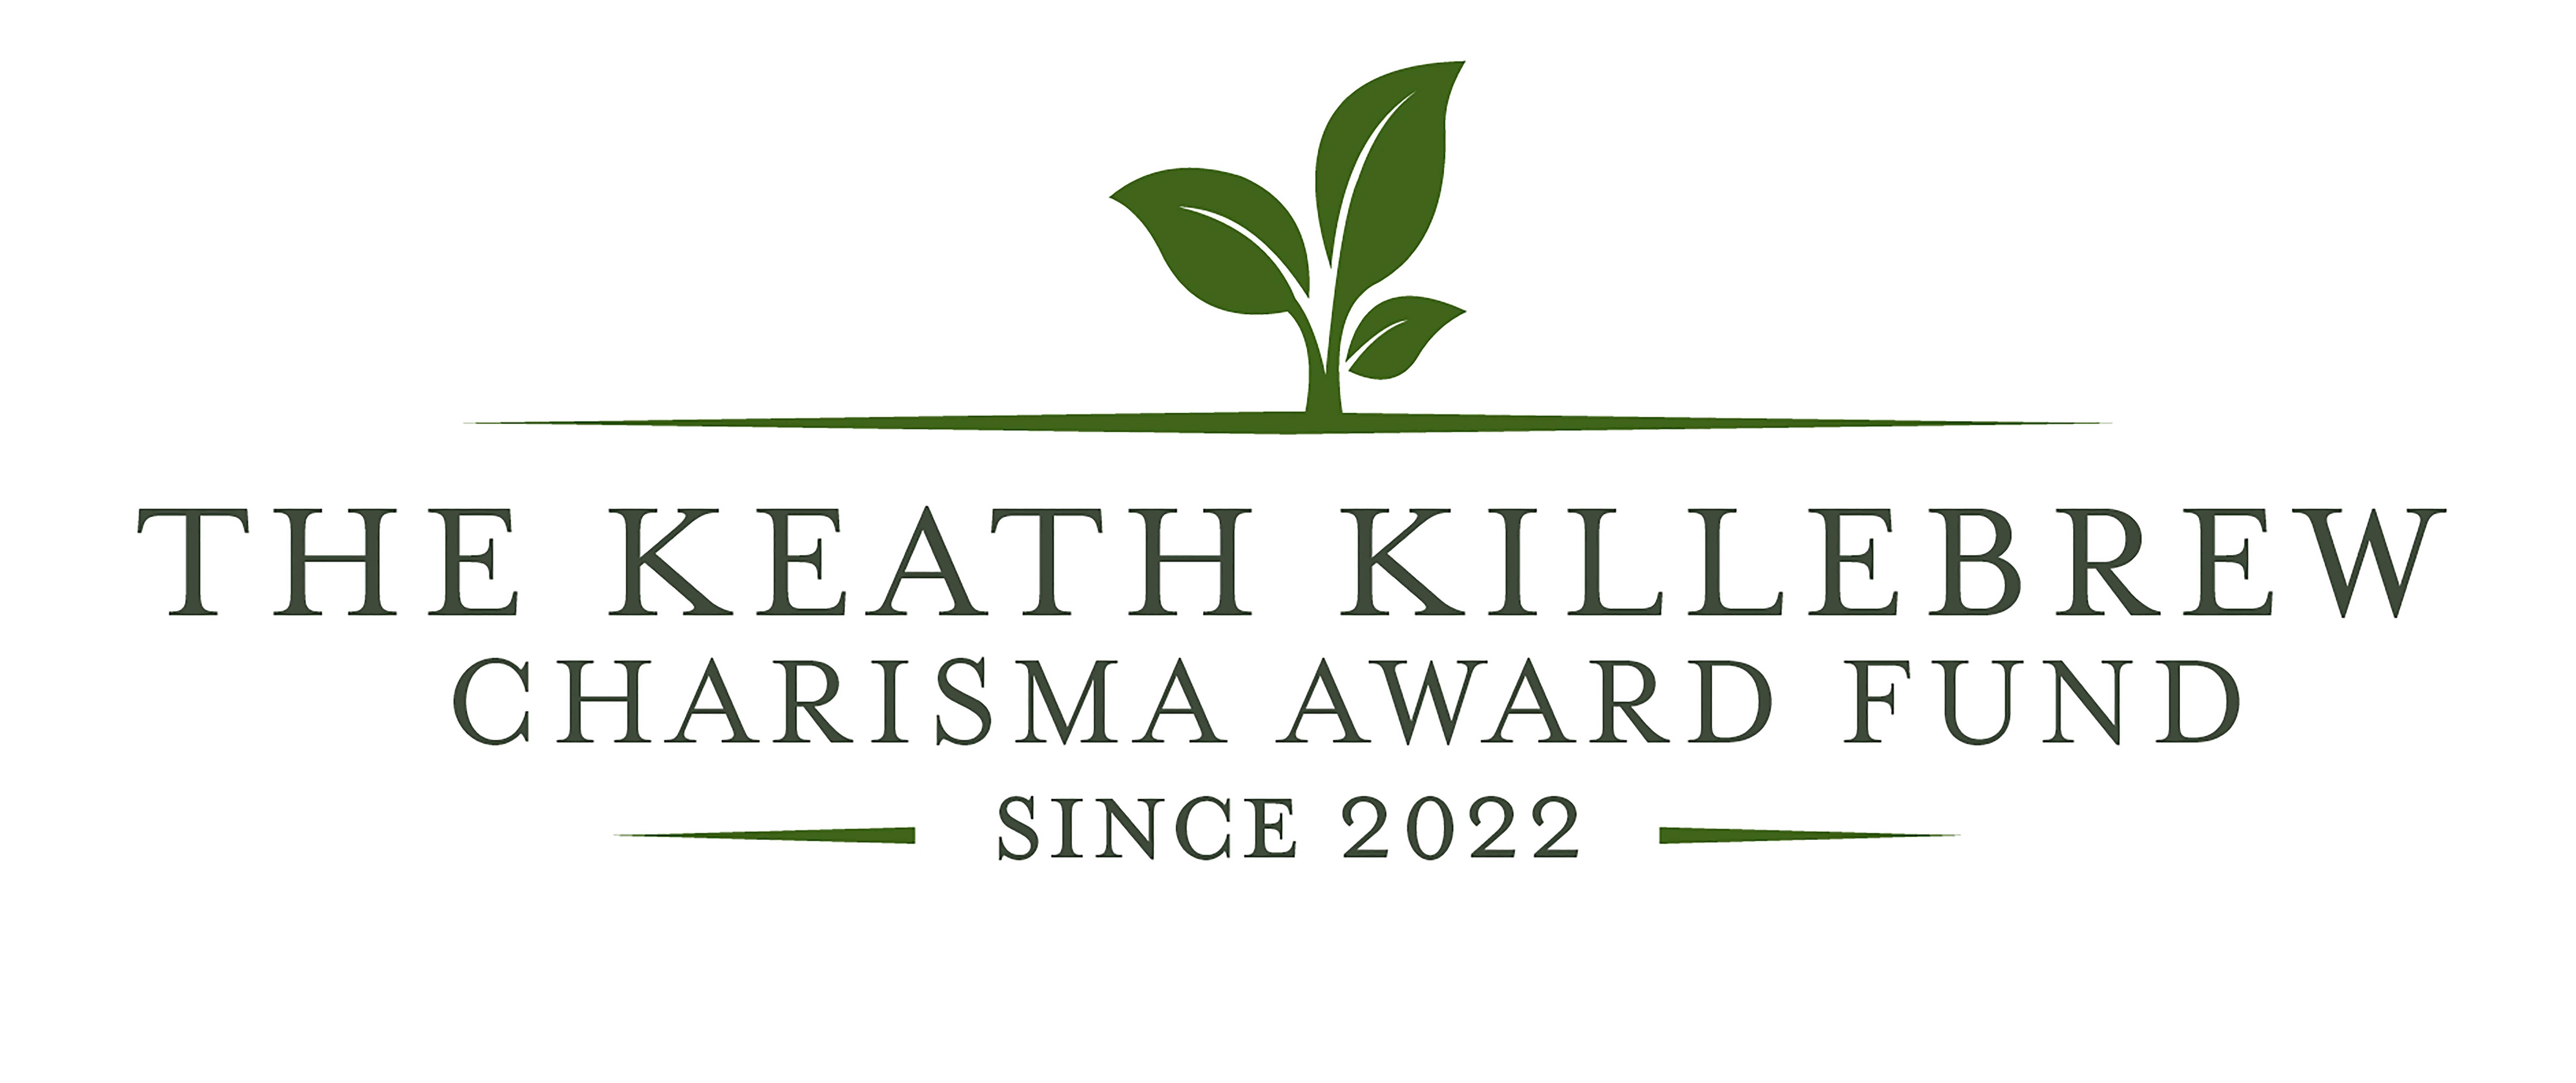 Keath Killebrew Charisma Award Fund